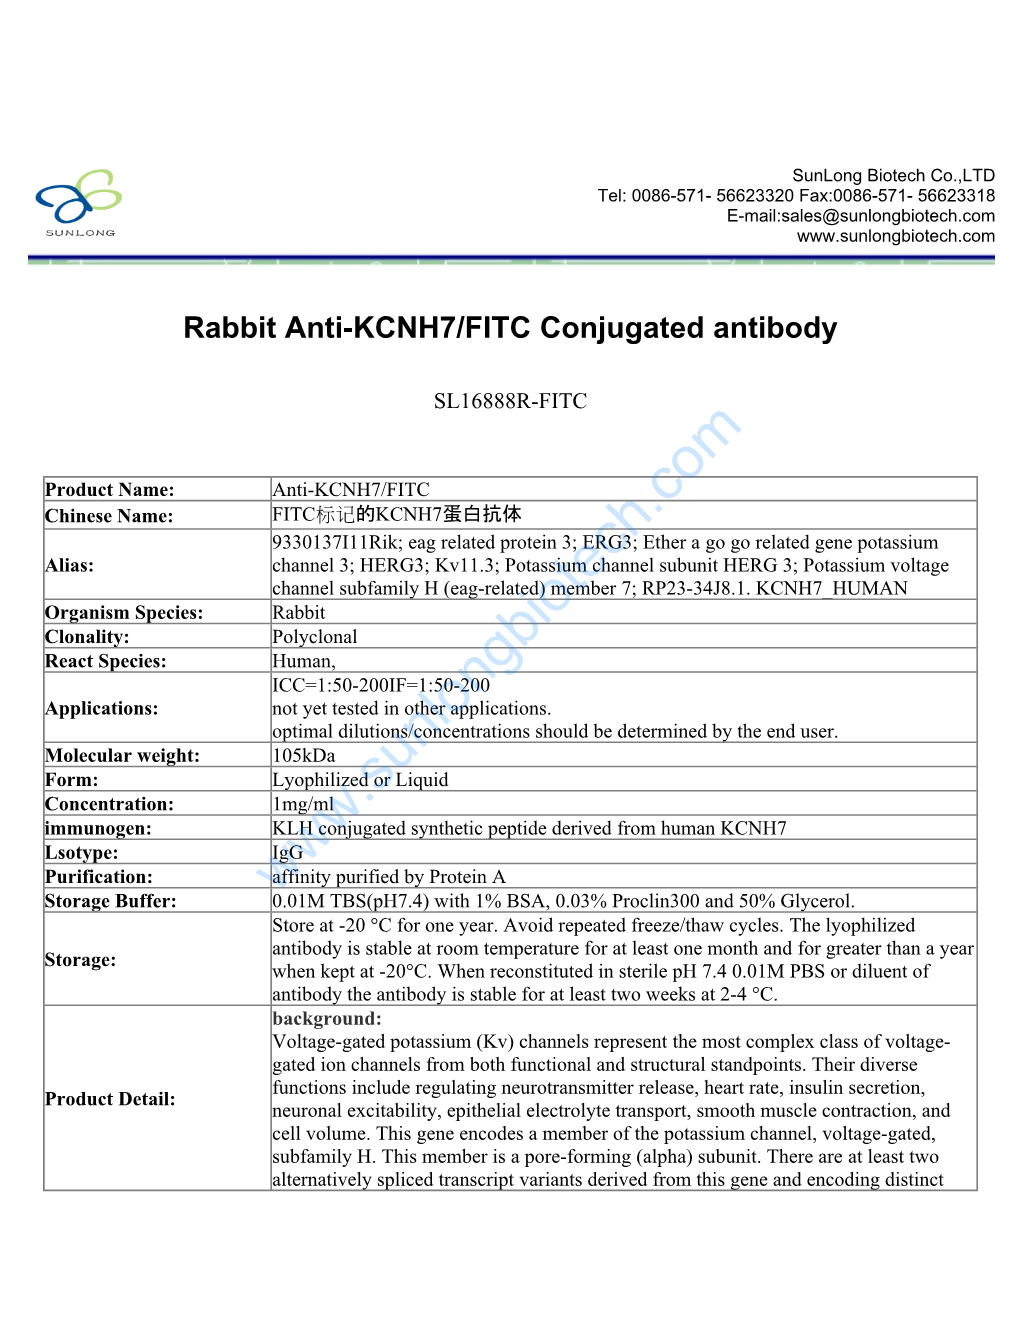 Rabbit Anti-KCNH7/FITC Conjugated Antibody